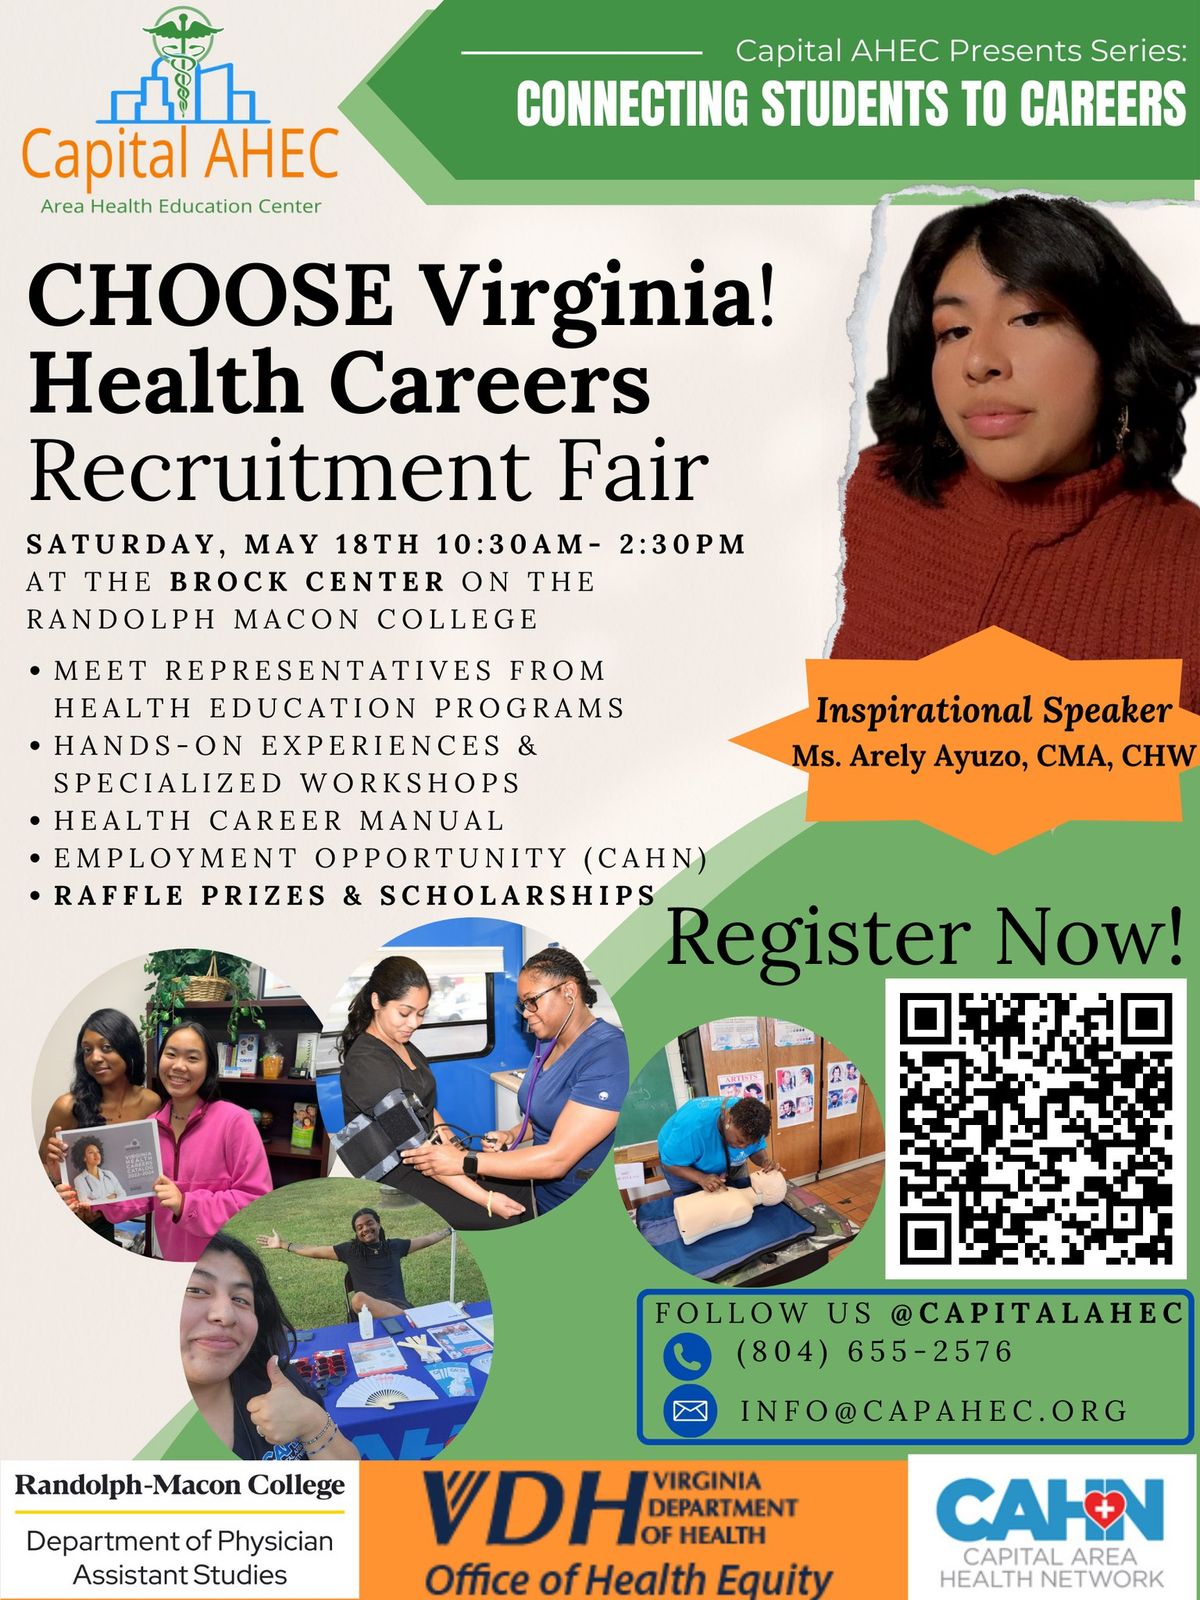 CHOOSE VIRGINIA! Health Careers Recruitment Fair